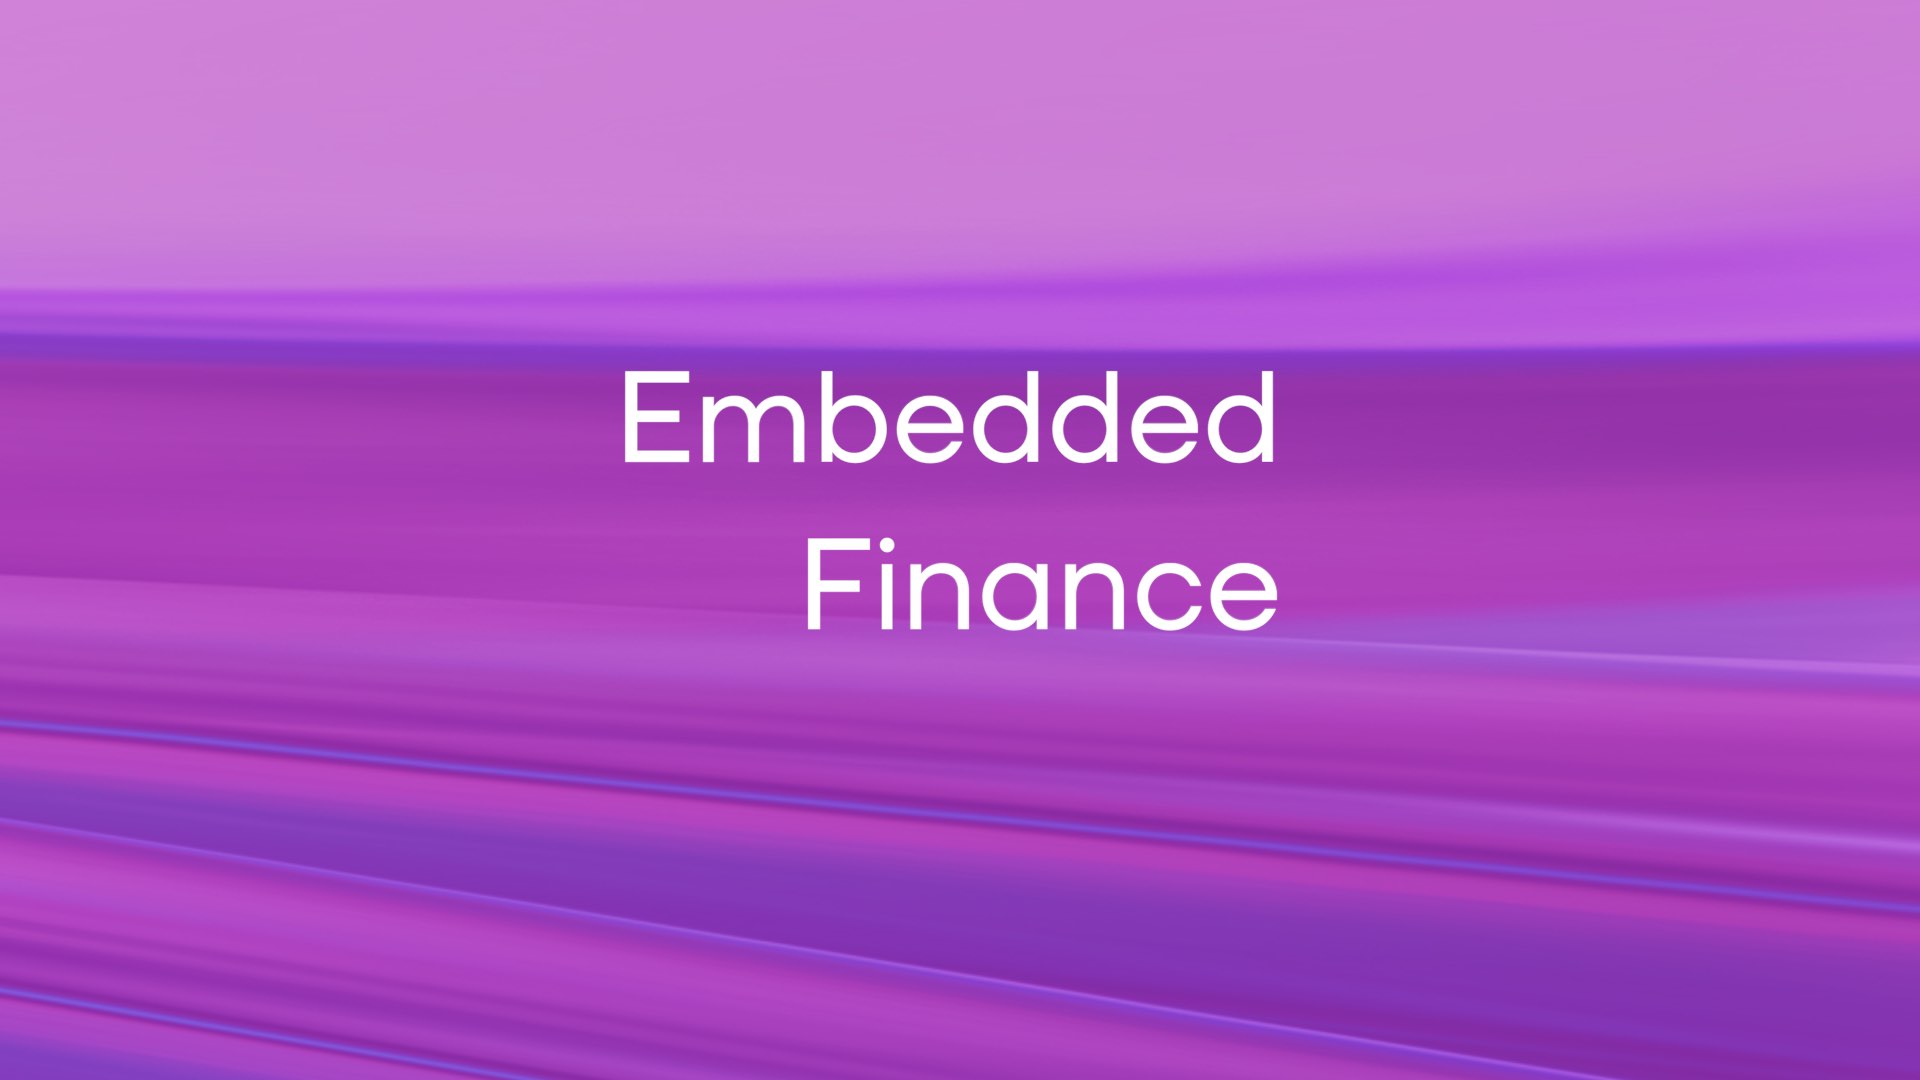 From Open Finance to Embedded Finance